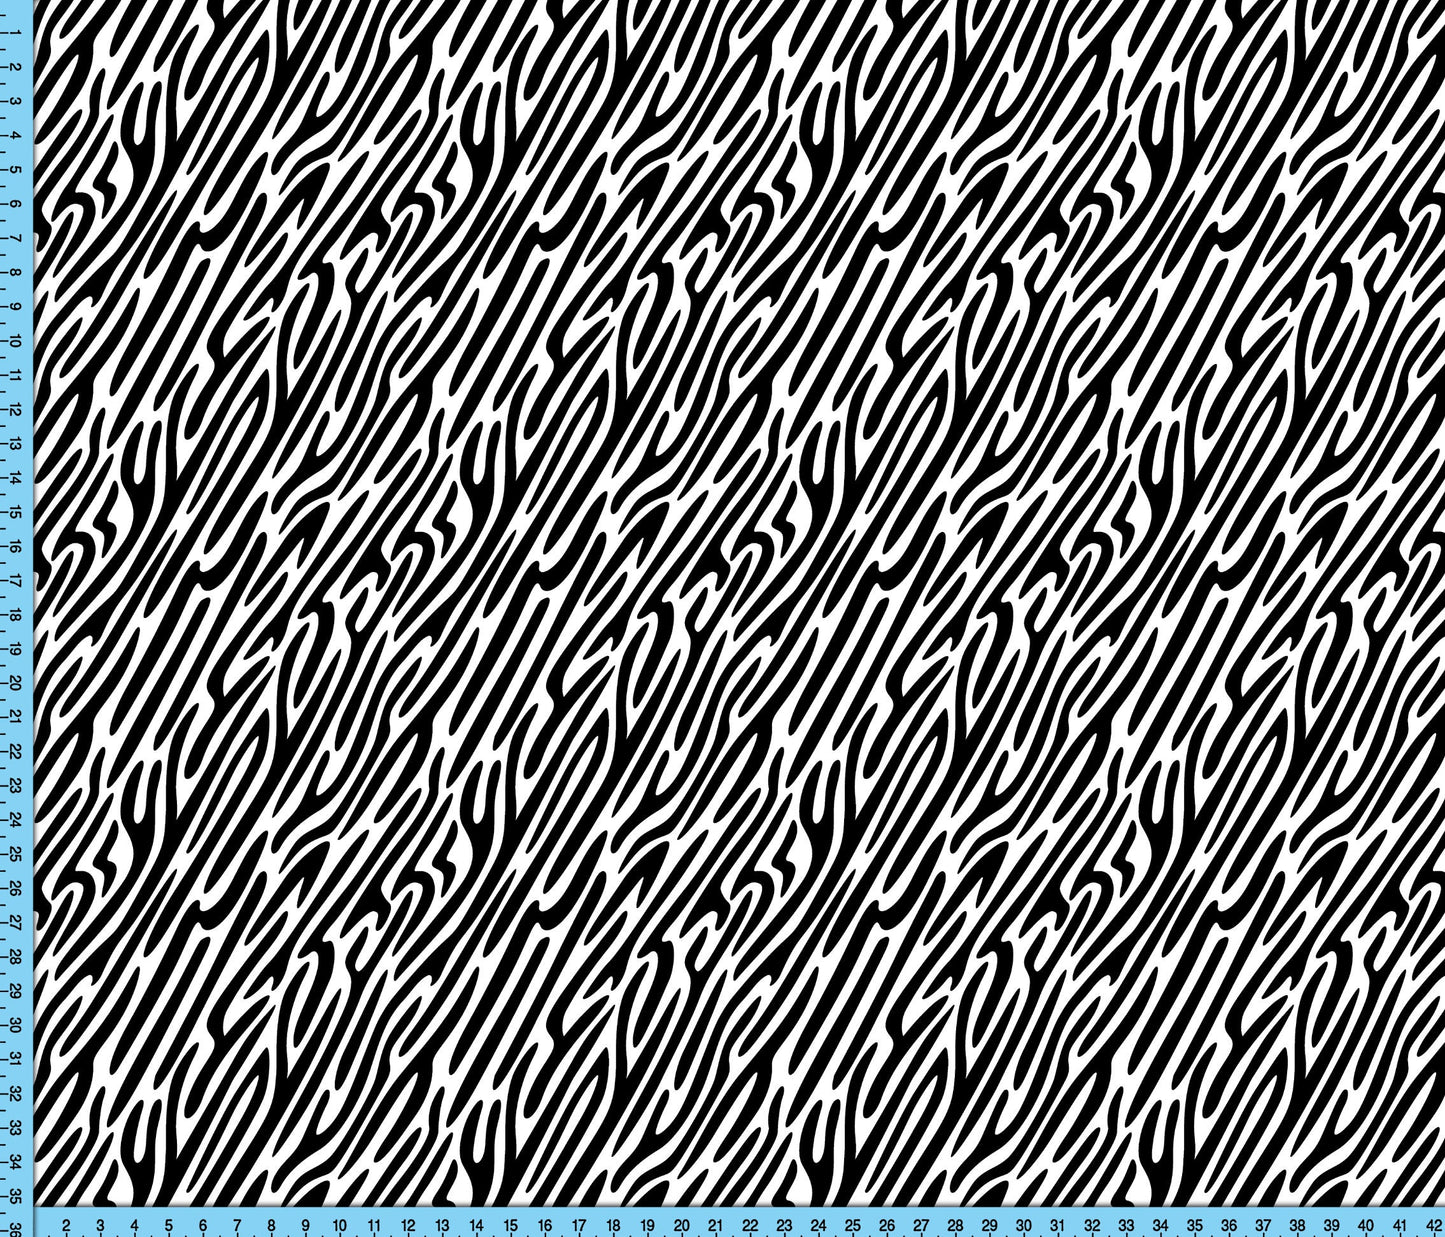 Zebra Stripe Print Fabric, Animal graphic pattern by the Yard on Spandex, Satin, Jersey knit, Bullet knit, Gabardine